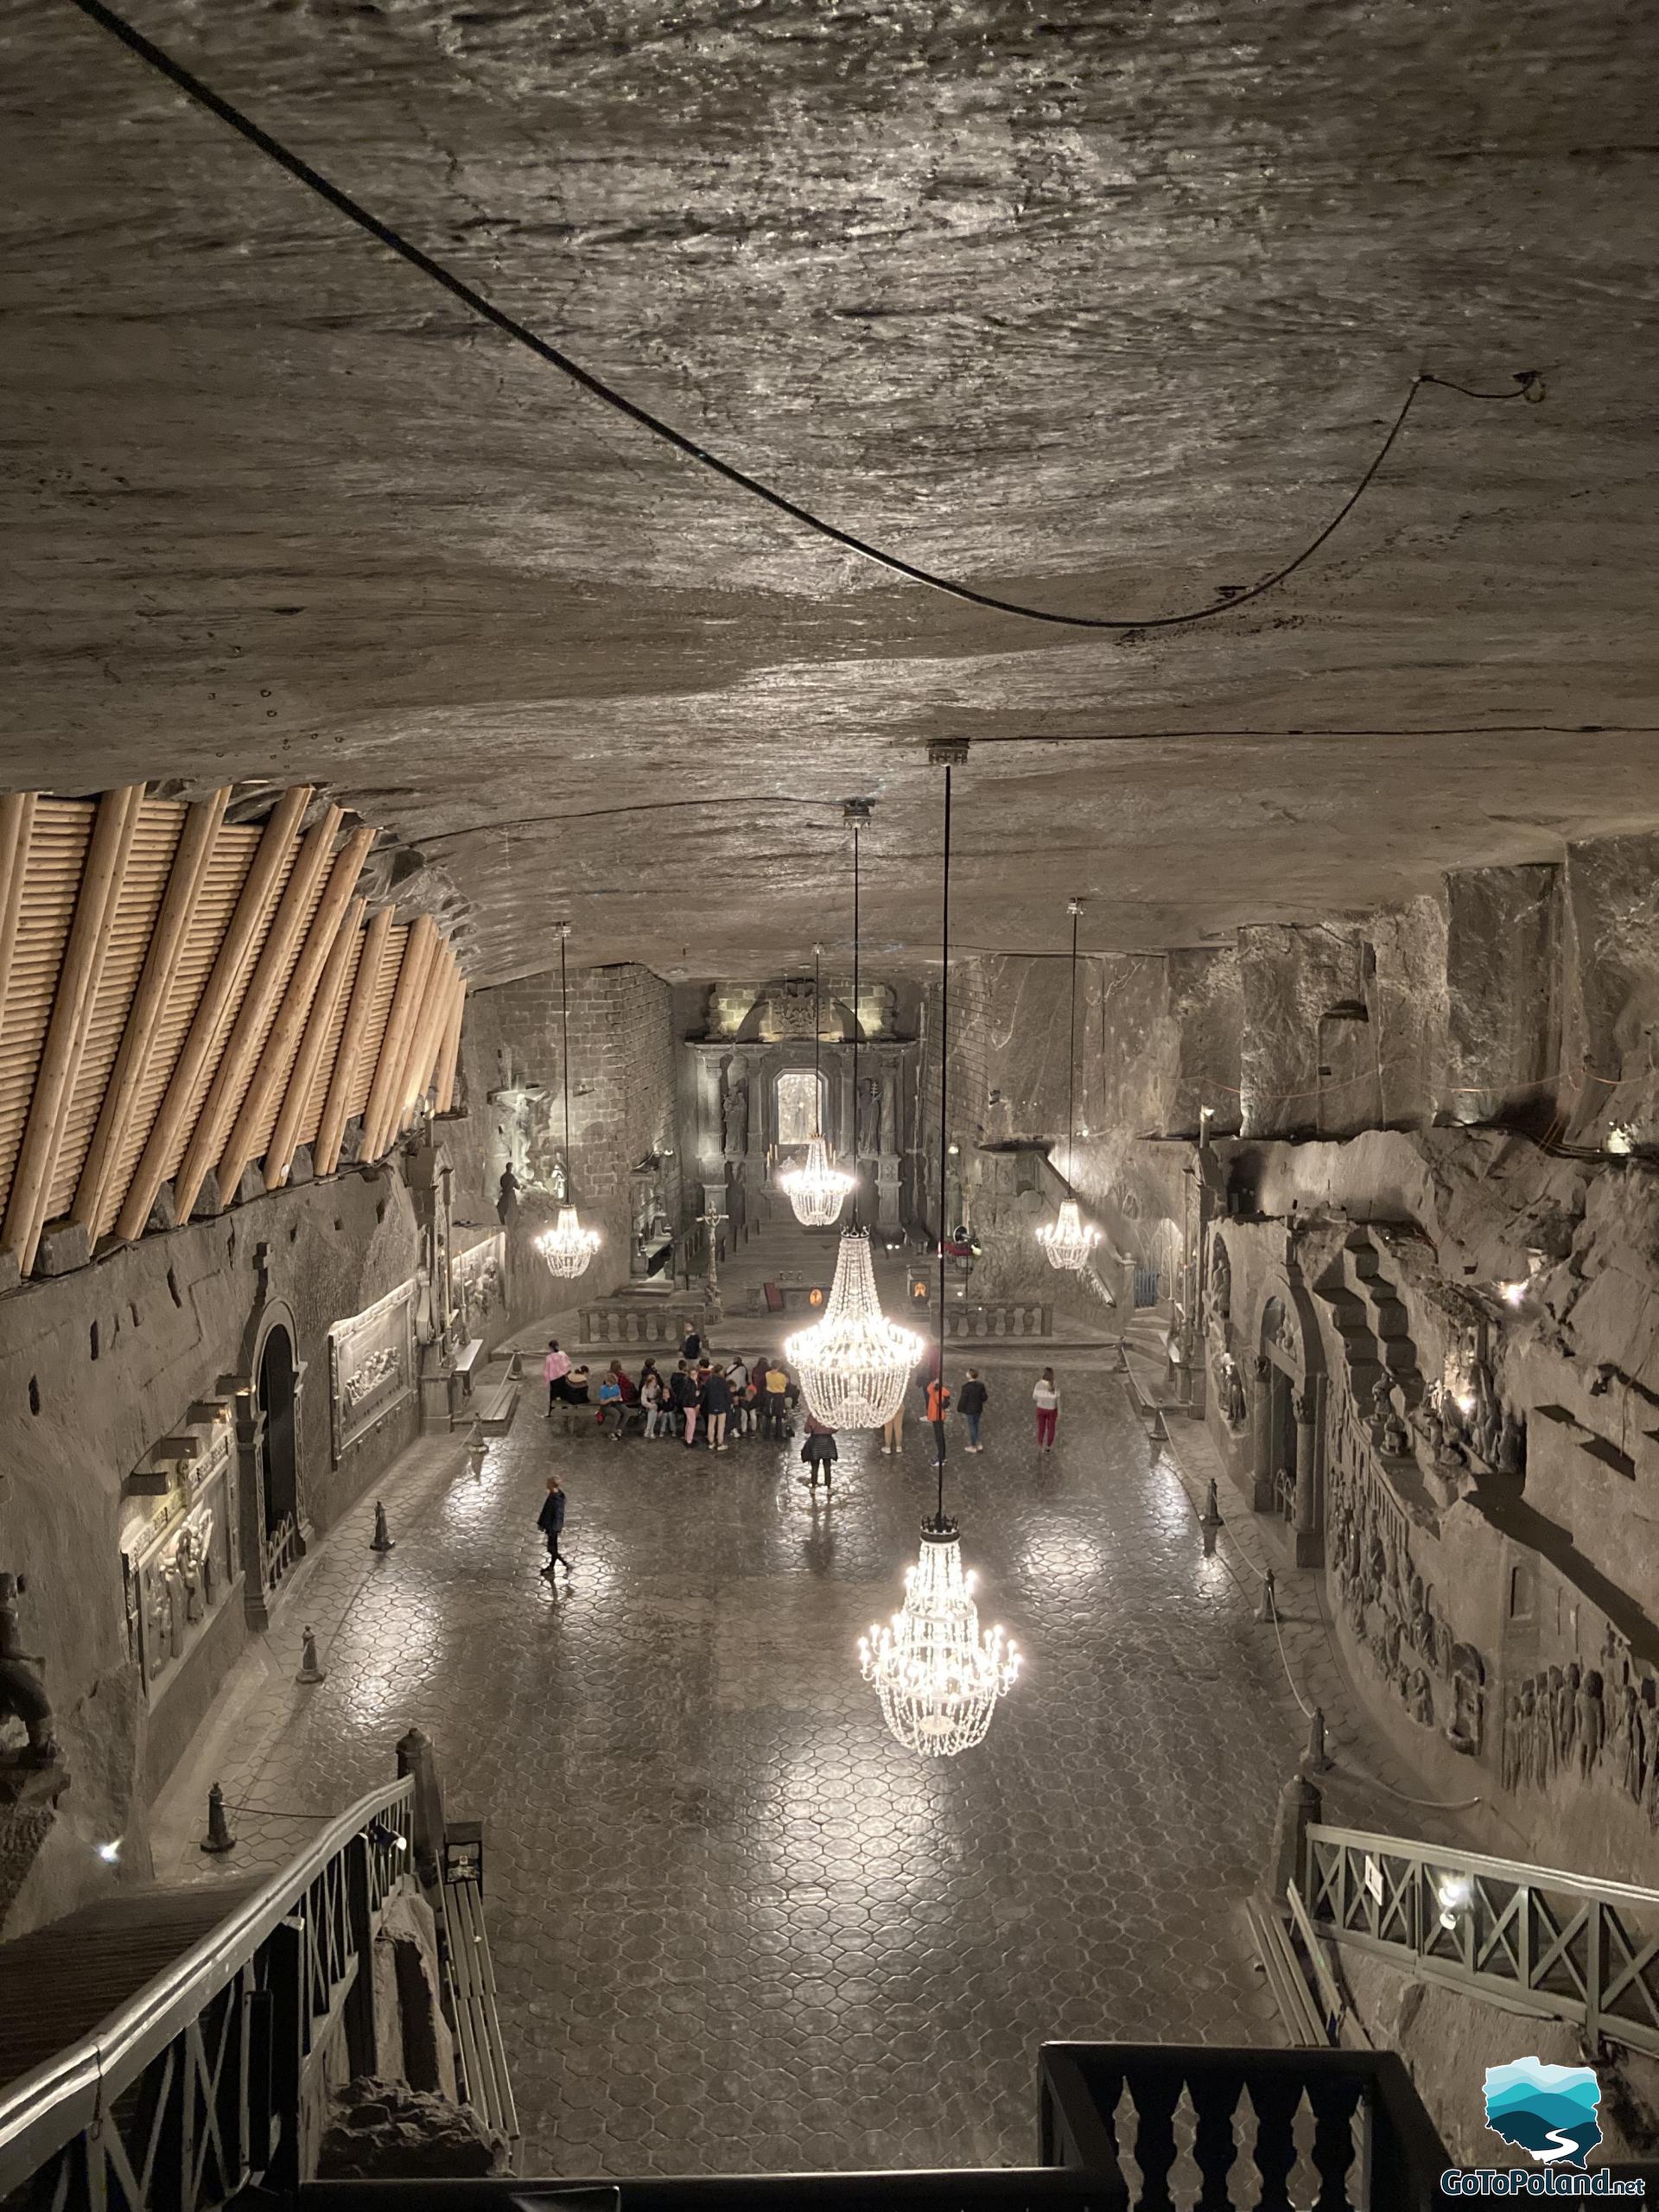 a huge chamber made of salt, a group of tourists, 5 salt chandeliers